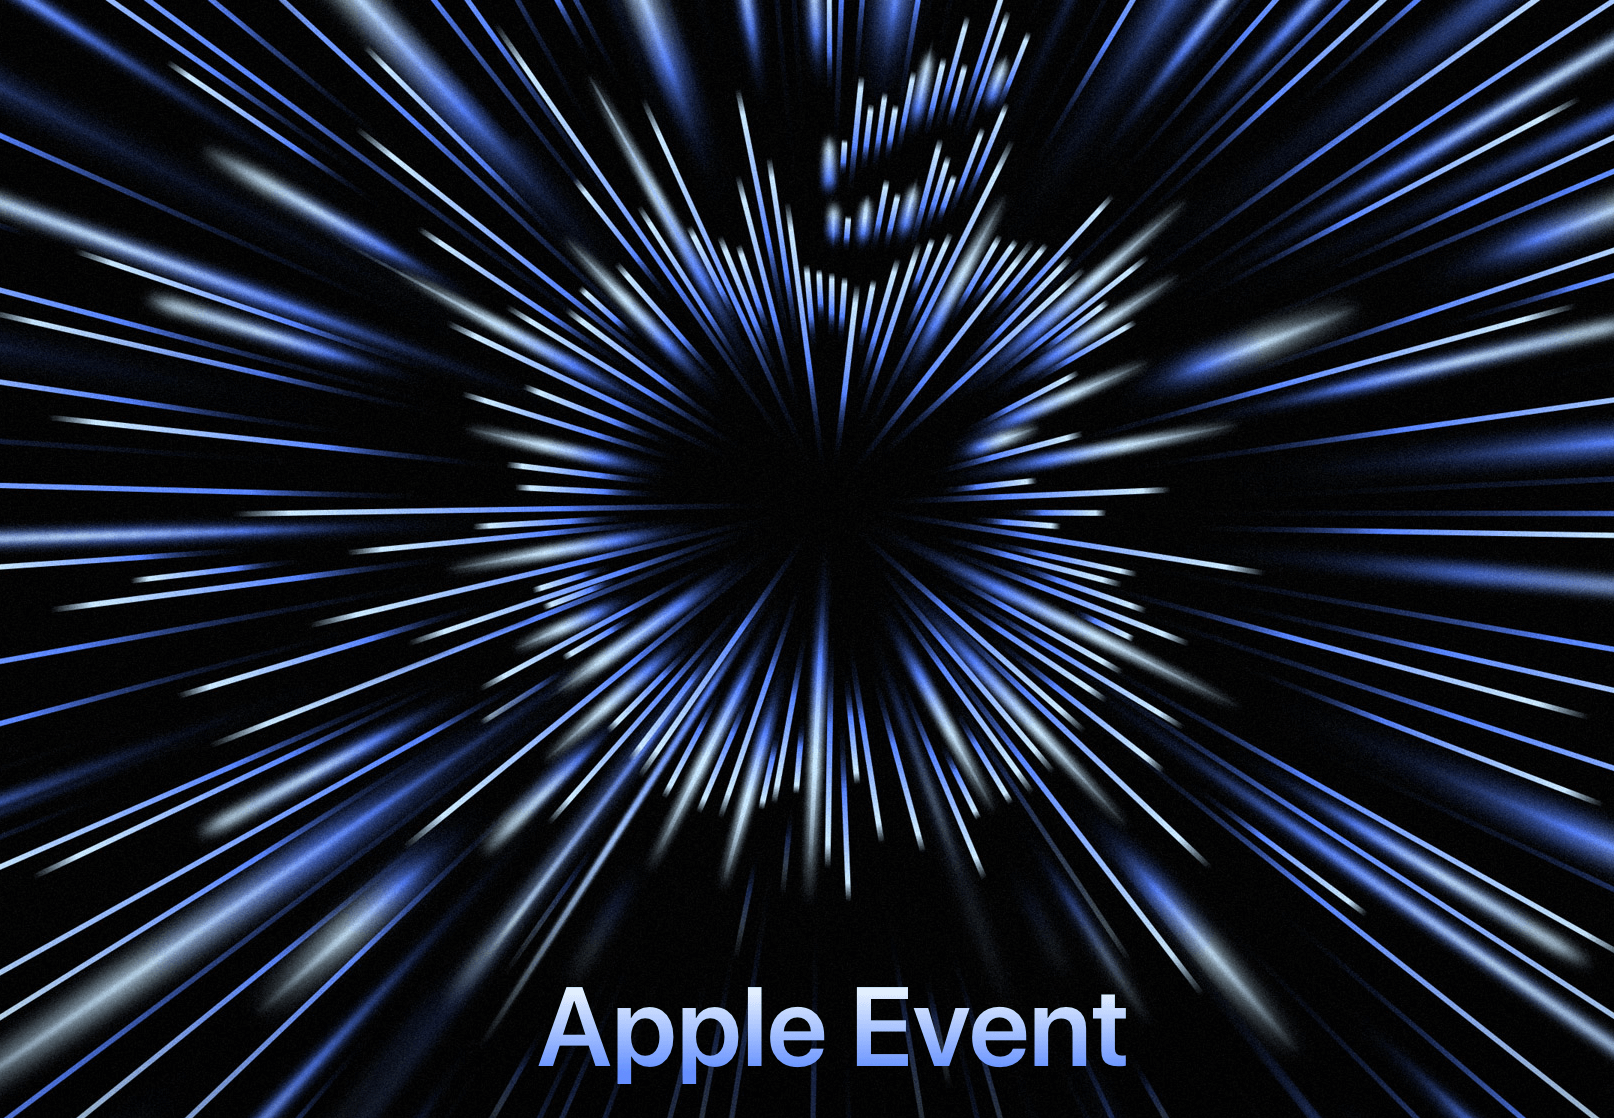 Apple’s Event